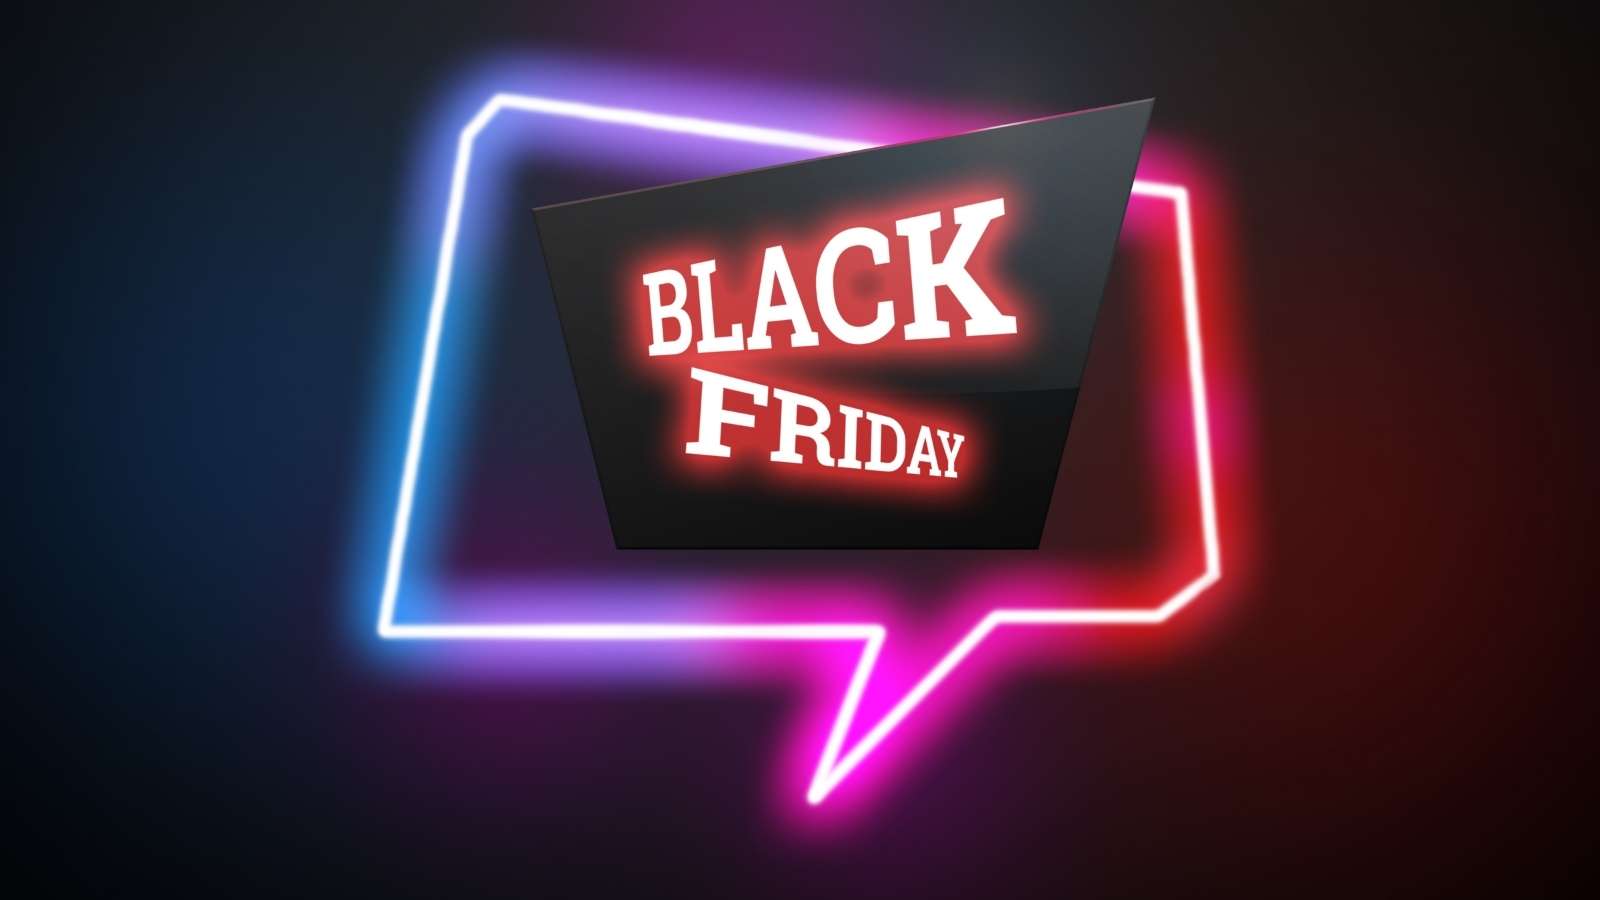 Creative marketing ideas for Black Friday & Cyber Monday